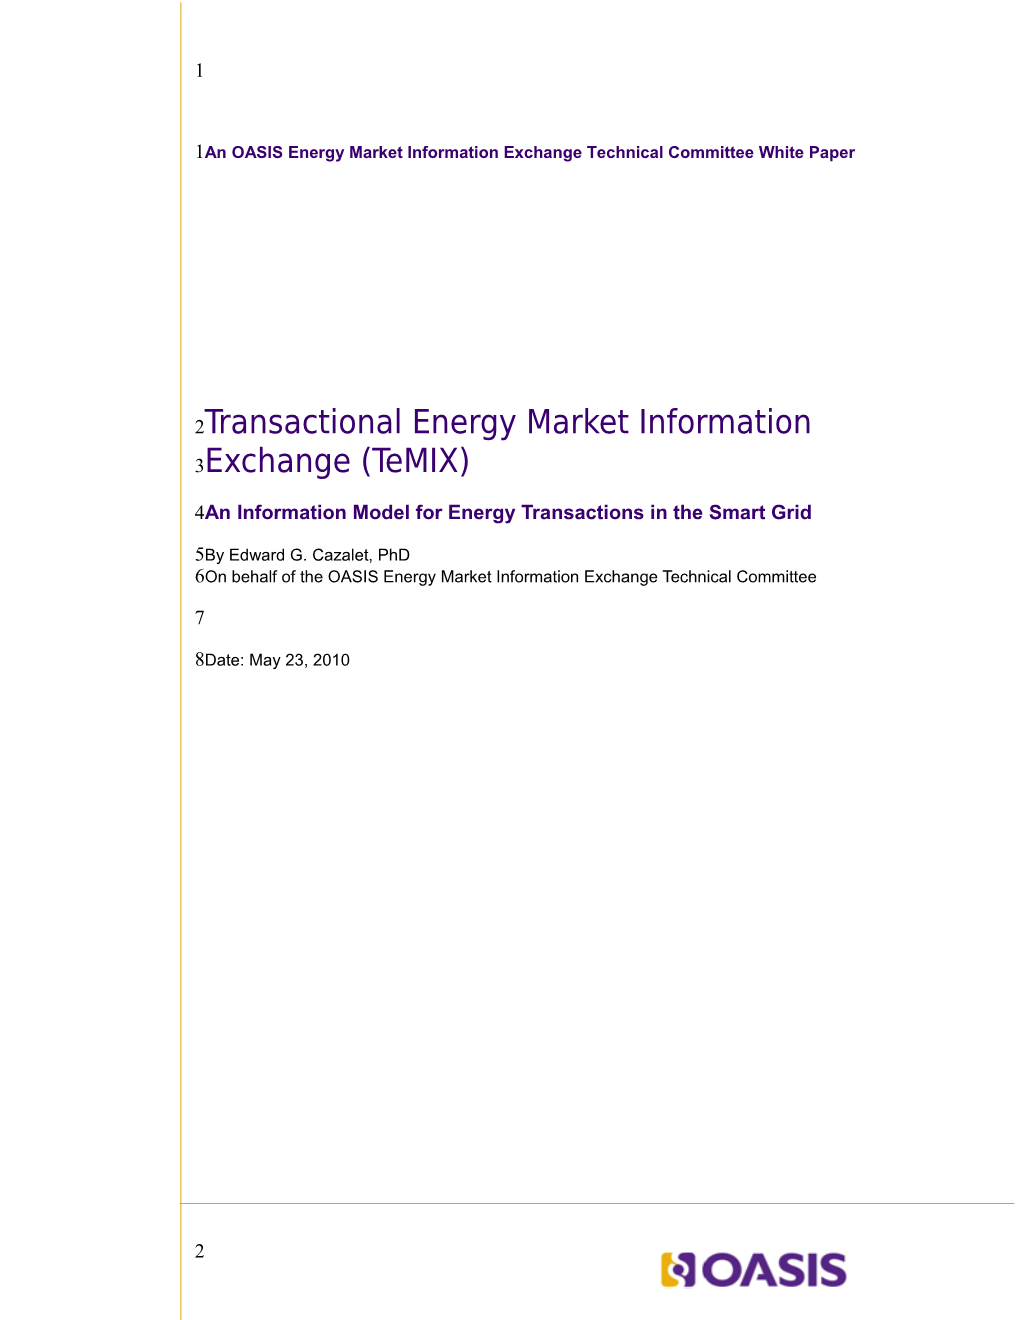 Transactional Energy Market Information Exchange